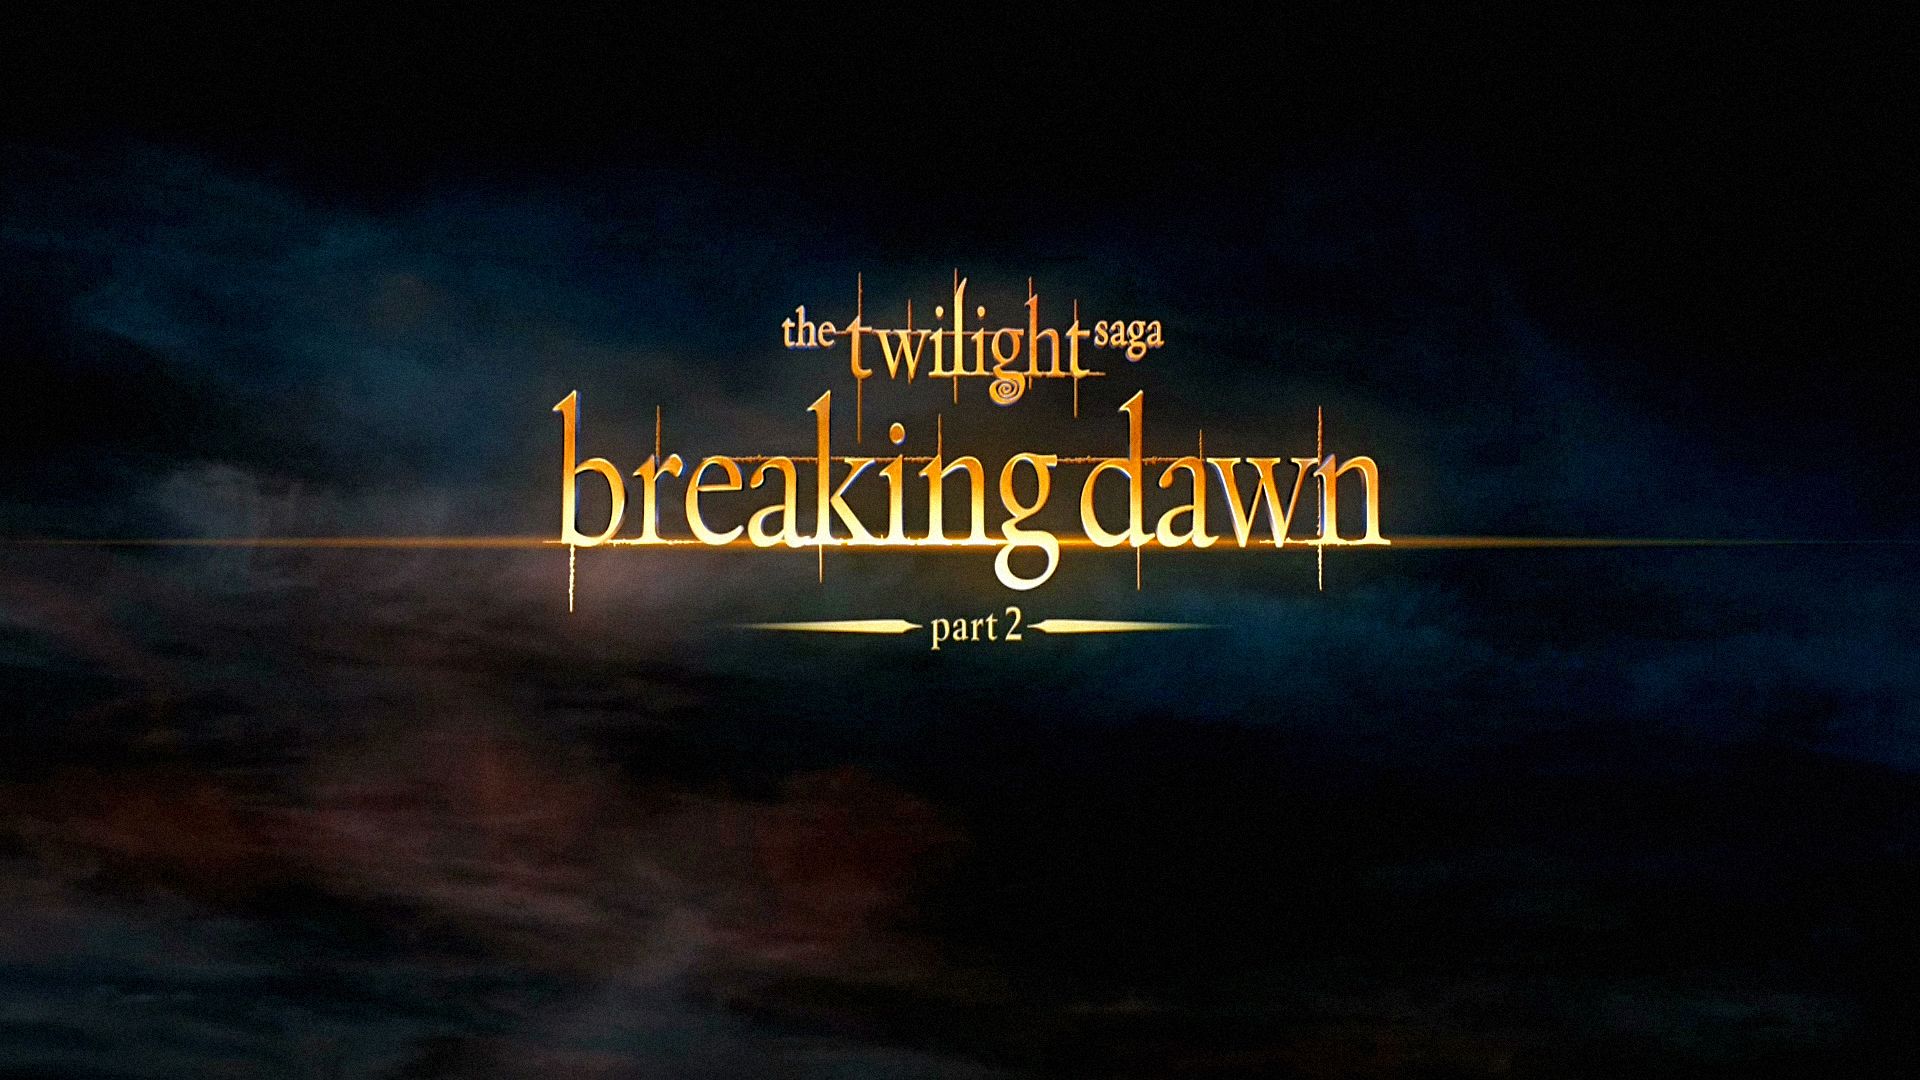 Breaking Dawn Part 2 wallpapers - Twilight Series Wallpaper ...